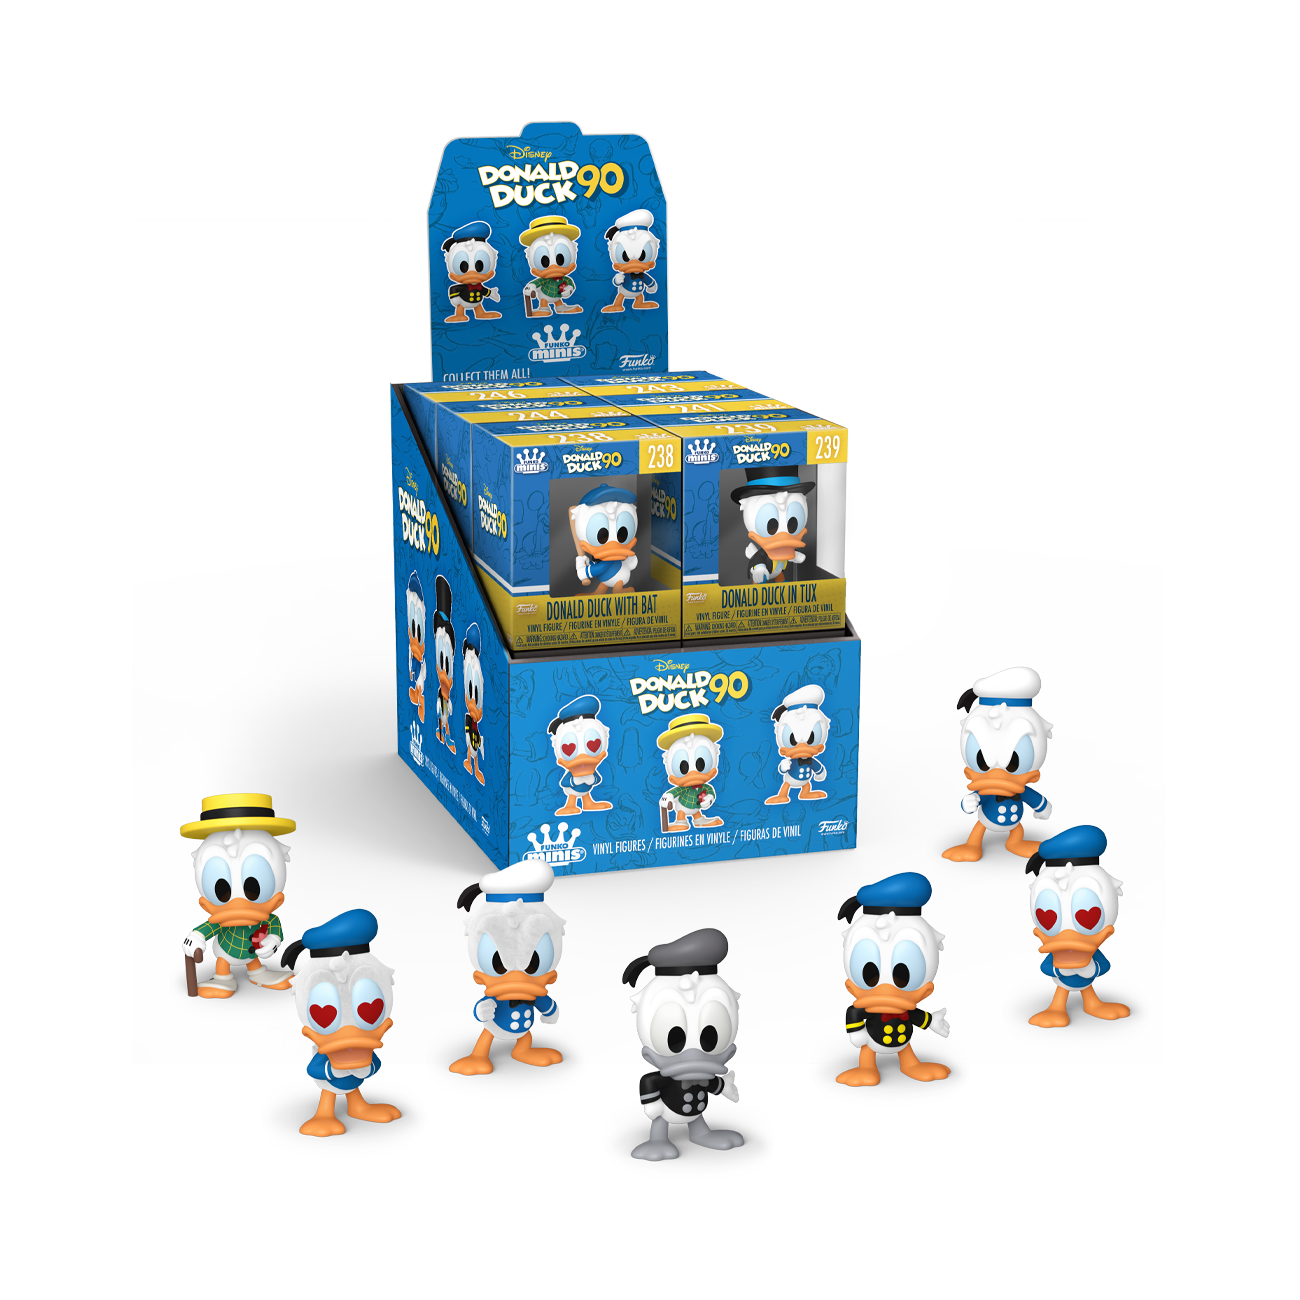 Buy Donald Duck 90th Anniversary Mini Vinyl Figures at Funko.